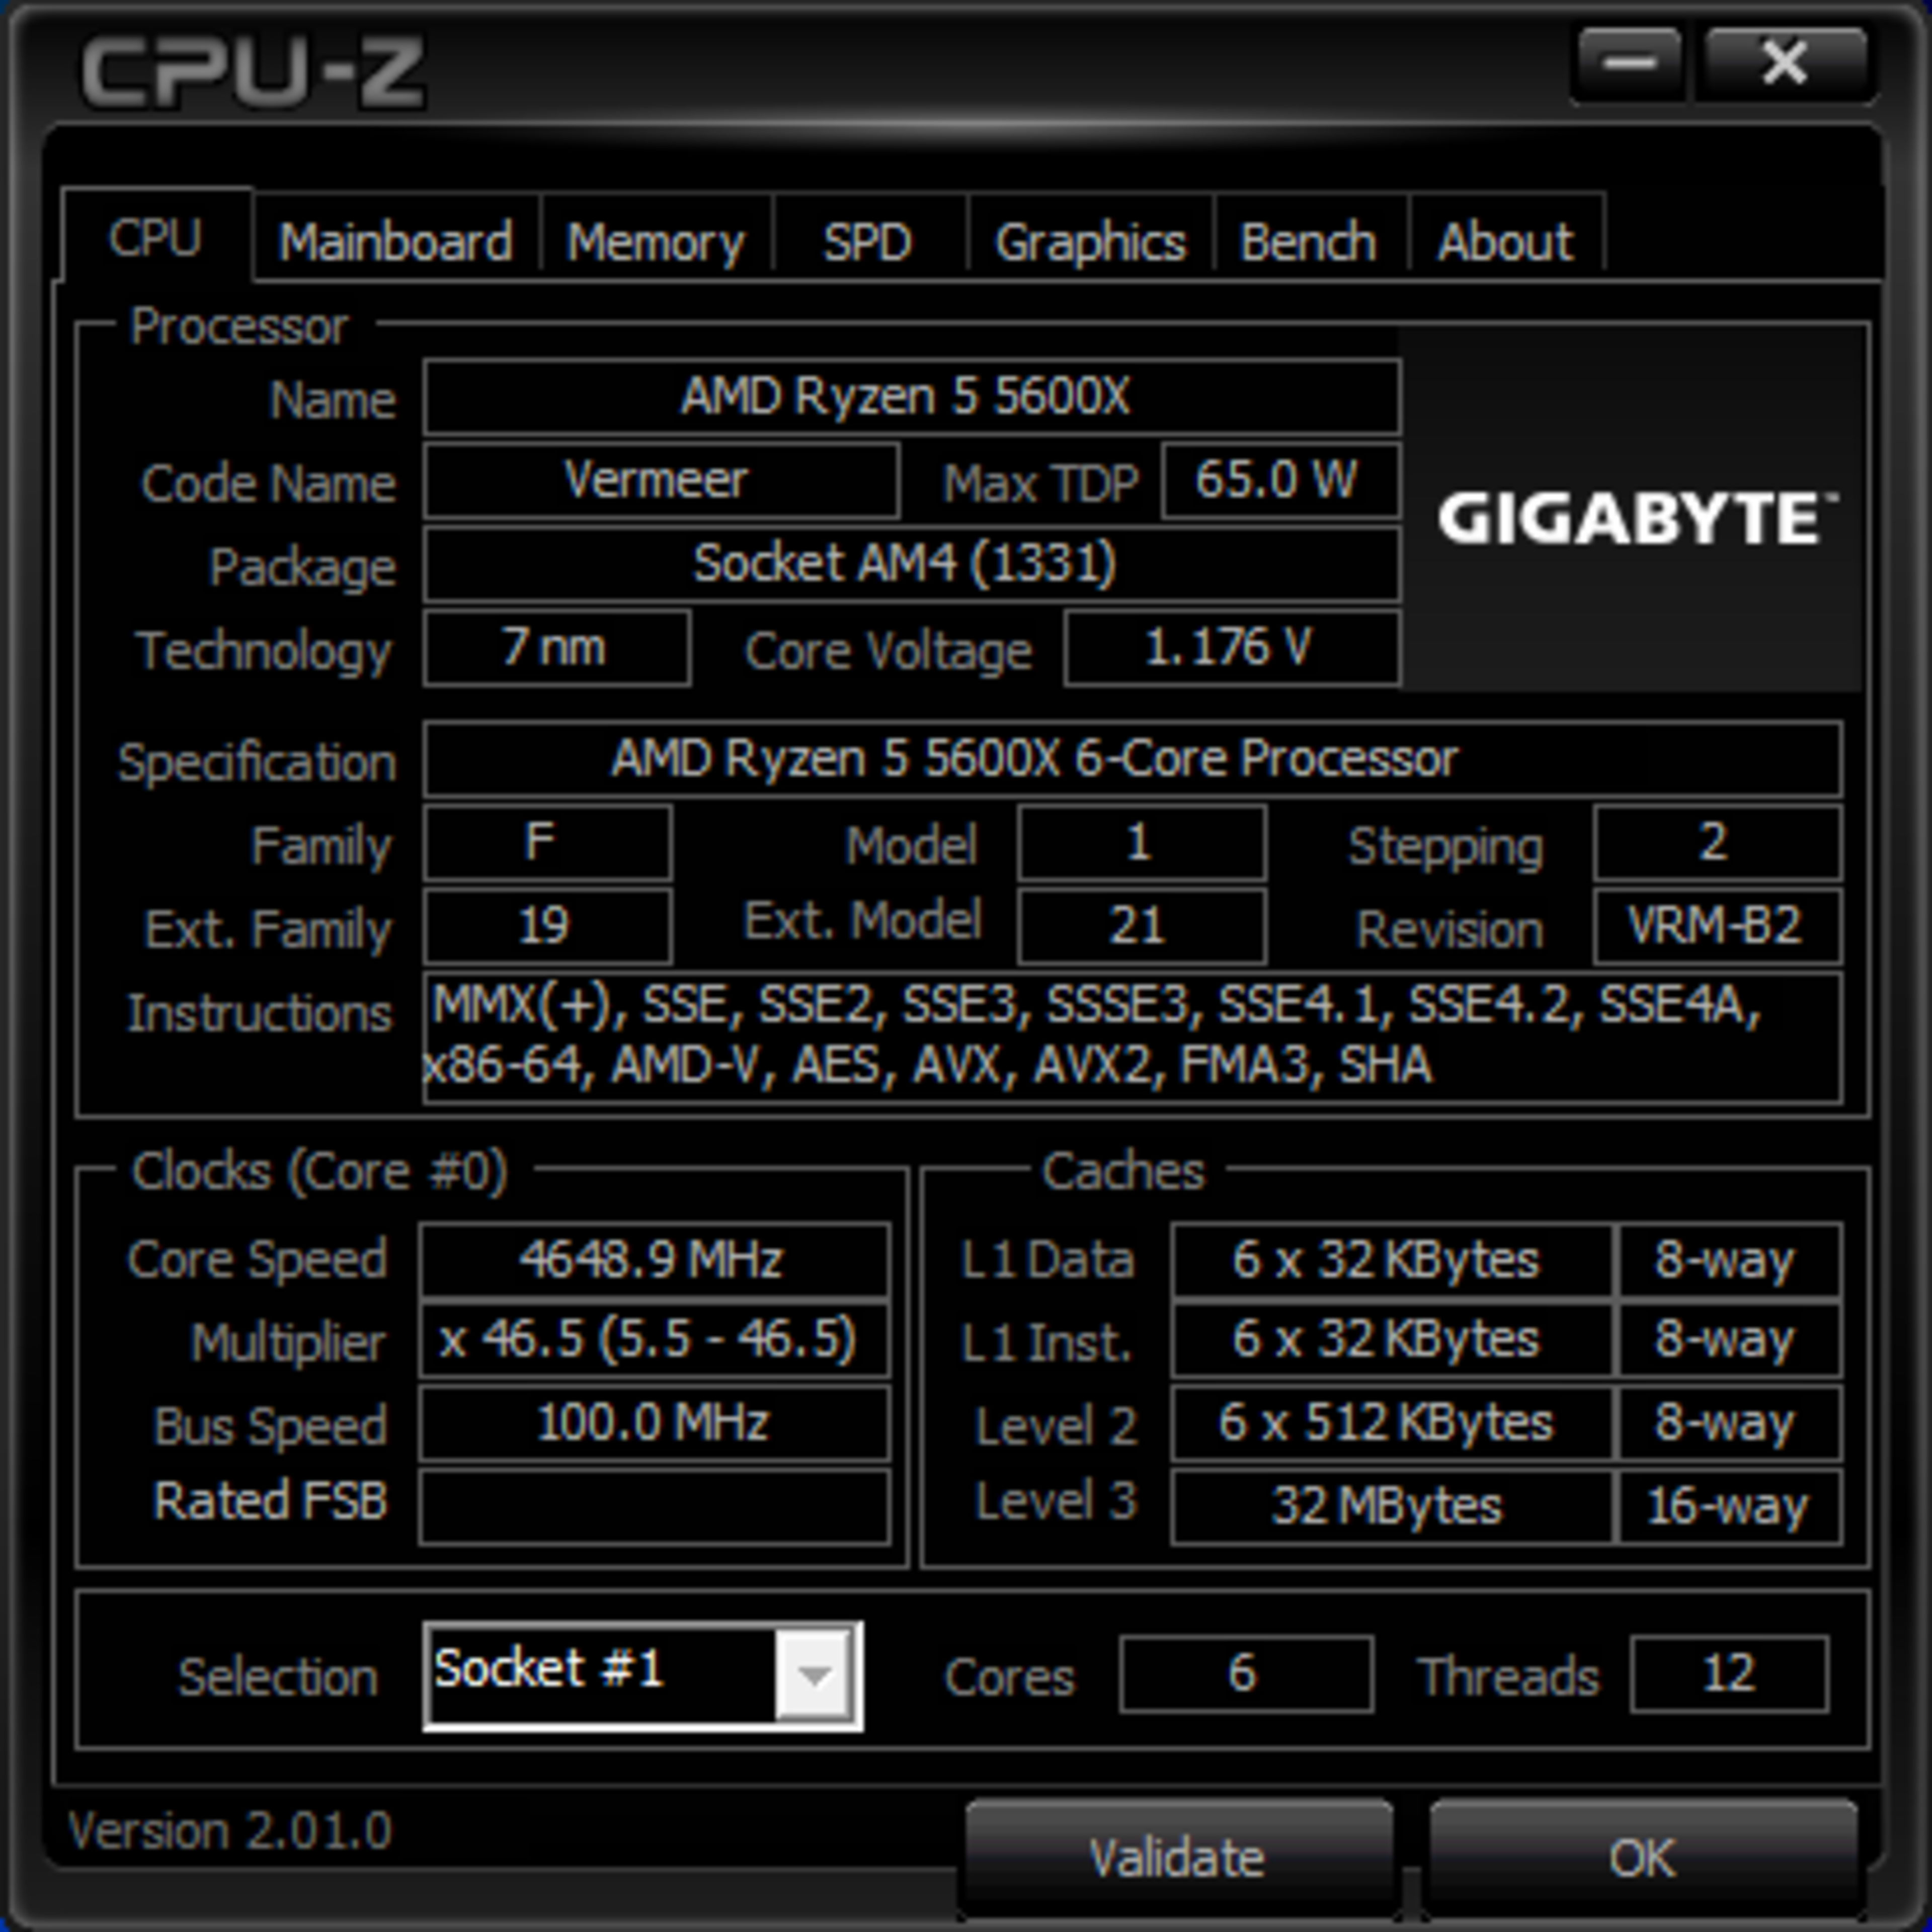 Gamora || Ryzen 5 5600X + RTX 2070 Super w/ 16GB of DDR4 RAM & 1TB M.2 SSD NVMe